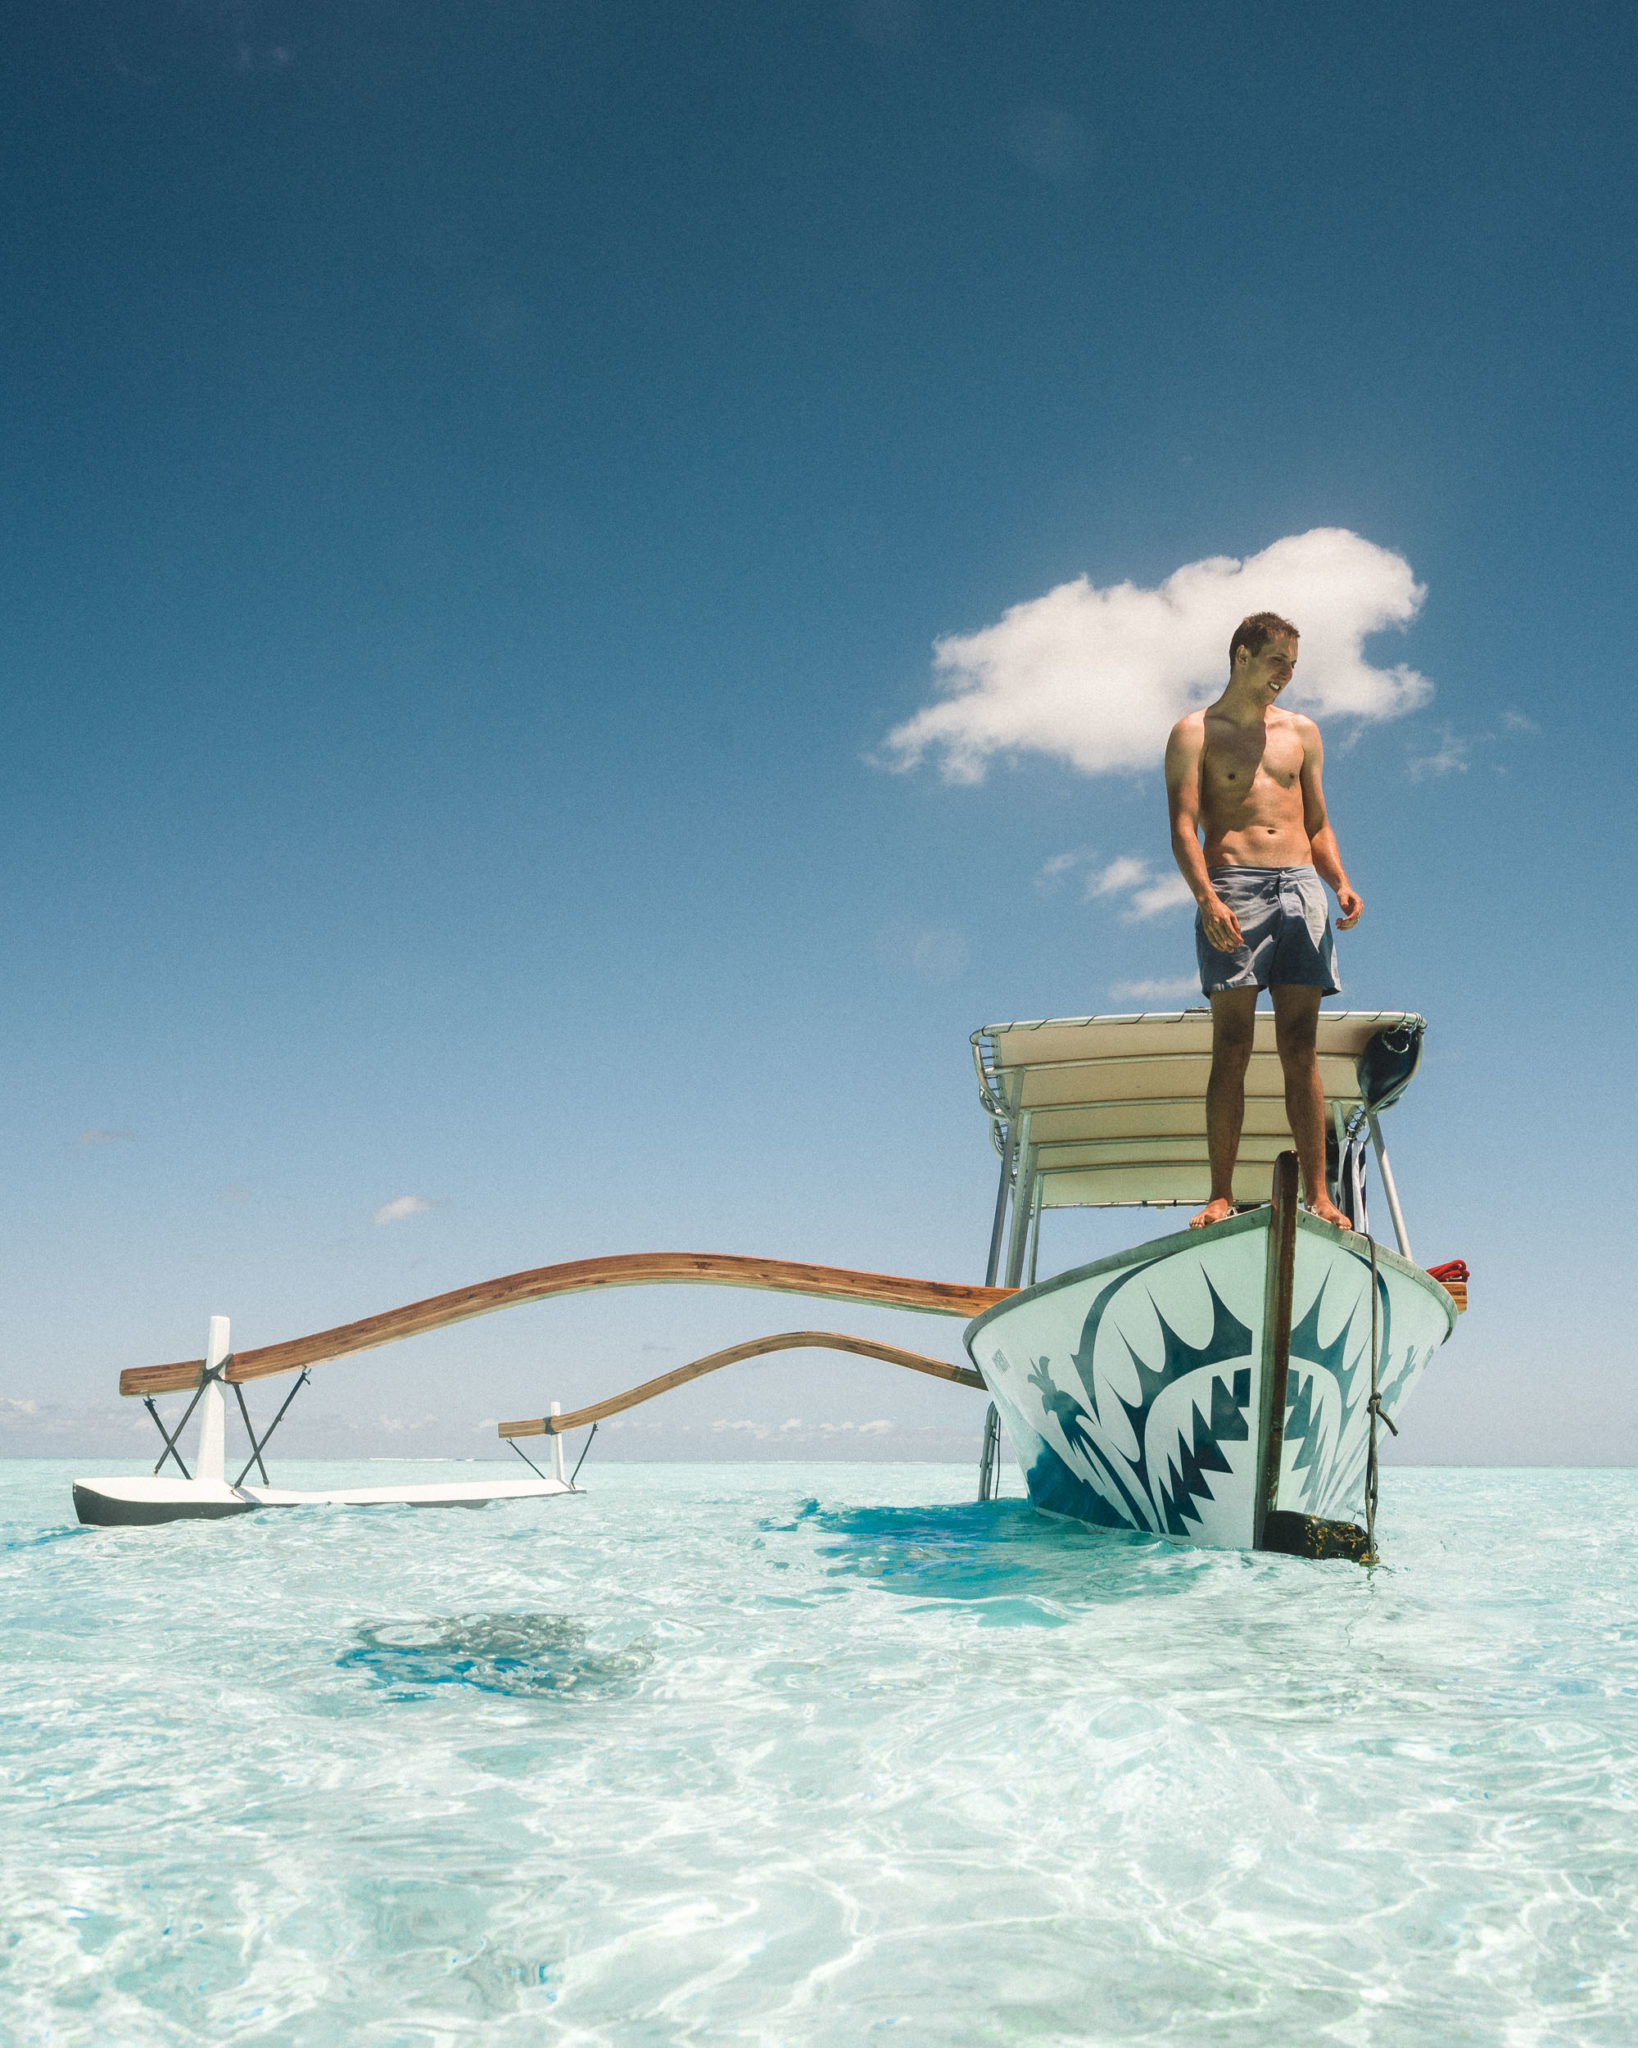 Boating in Bora Bora Tahiti for our honeymoon via @finduslost